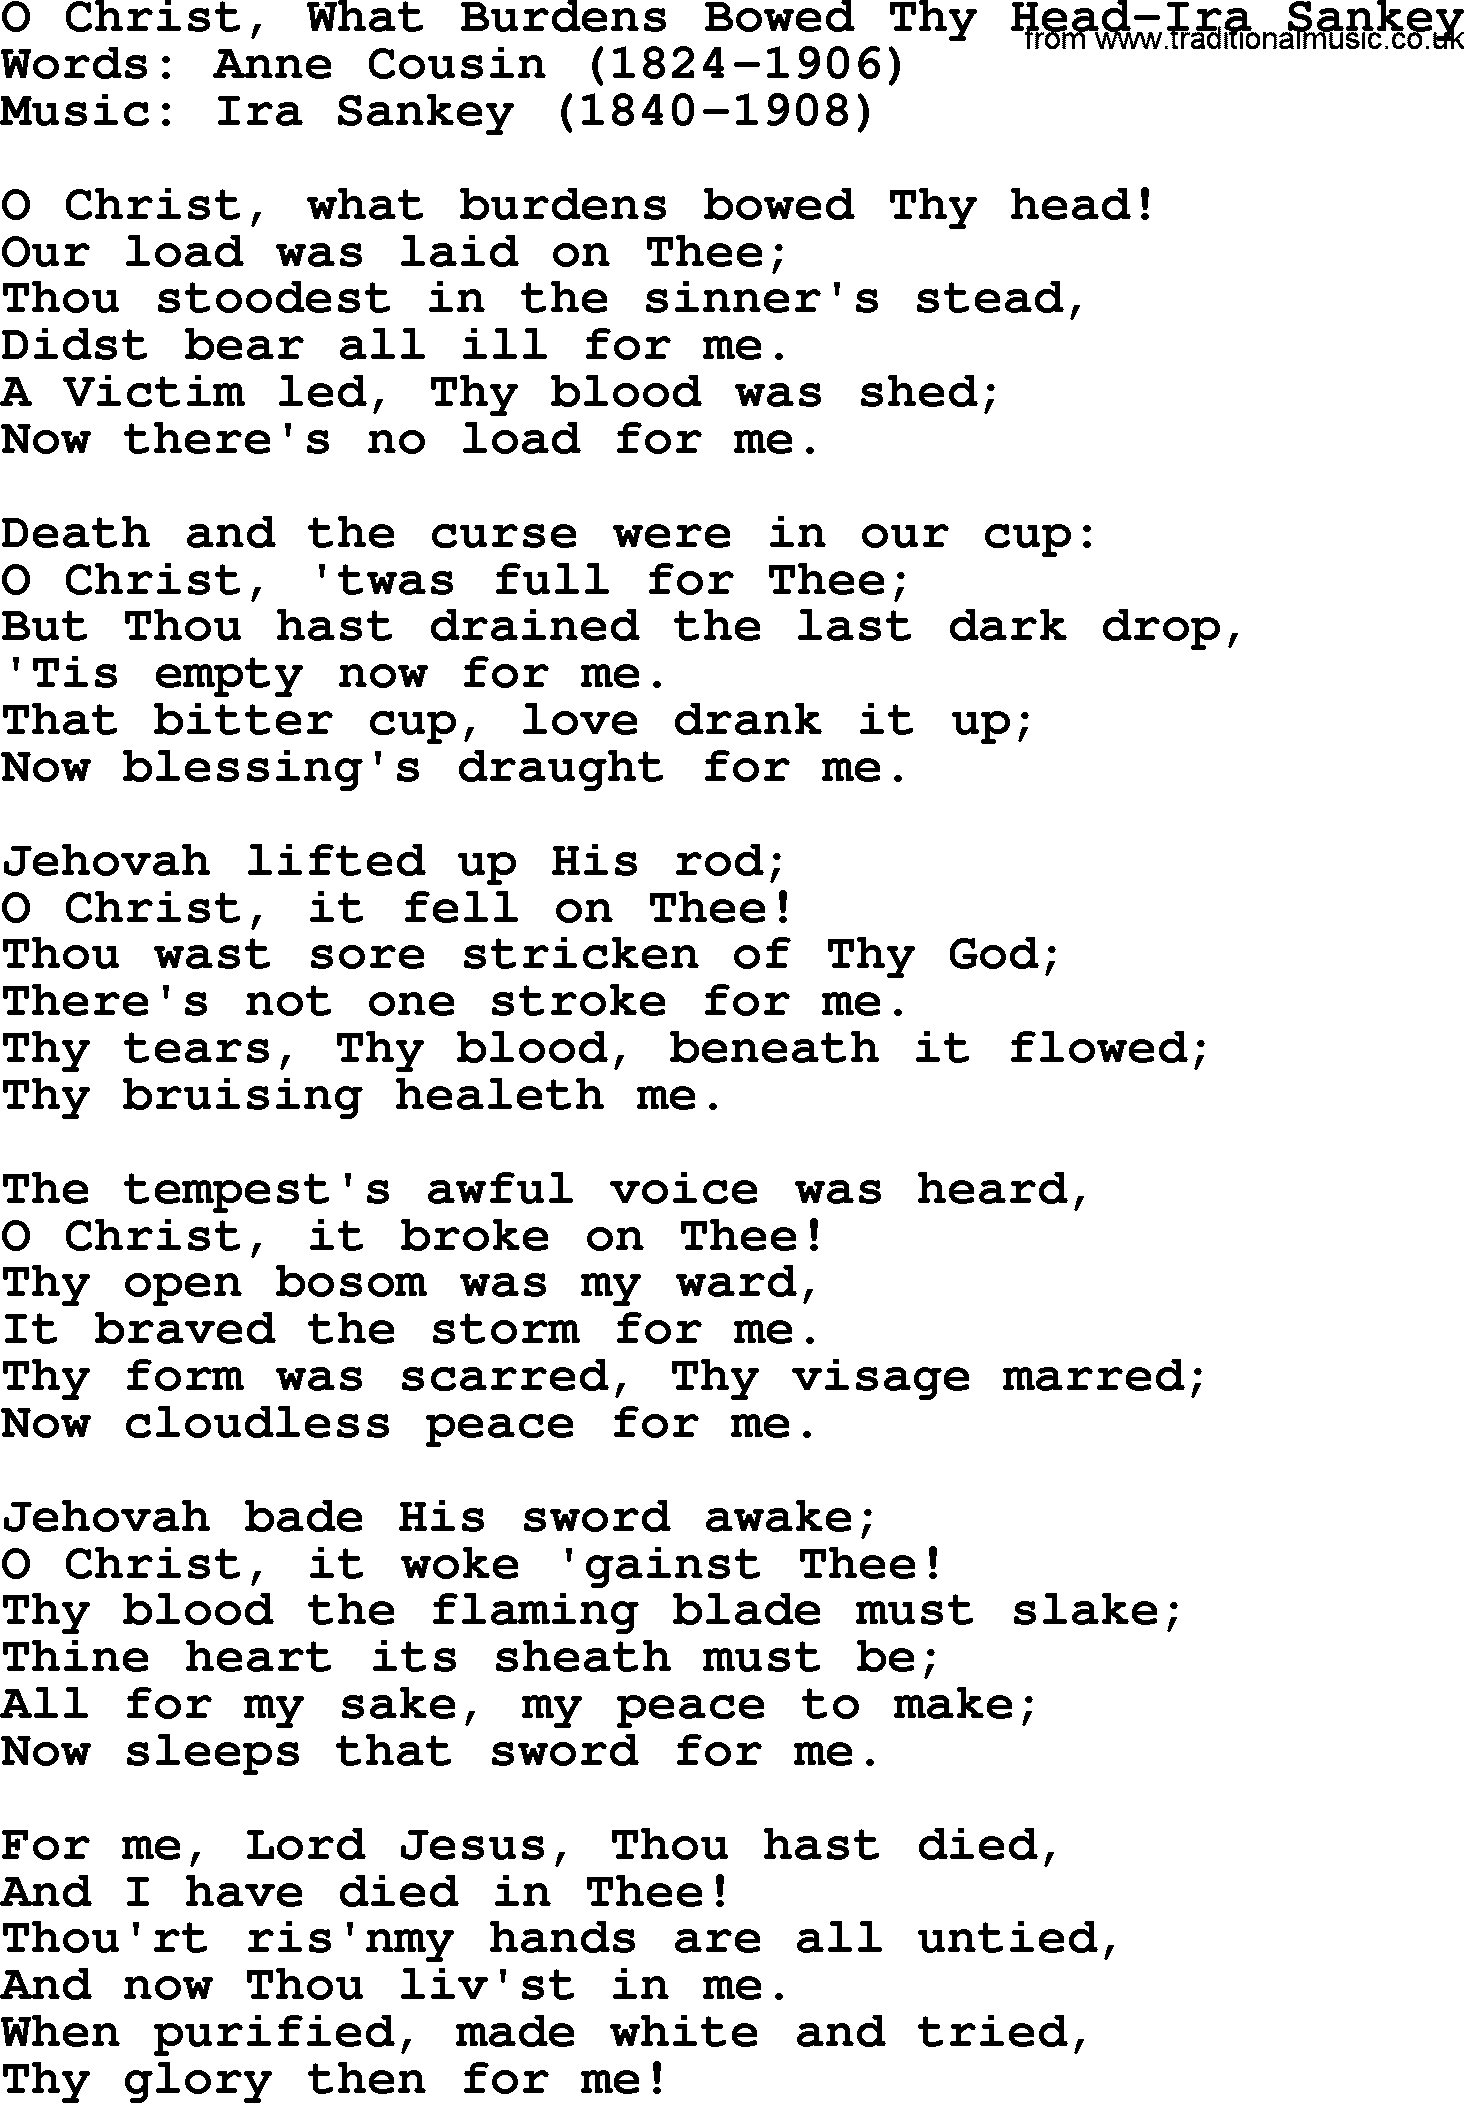 Ira Sankey hymn: O Christ, What Burdens Bowed Thy Head-Ira Sankey, lyrics